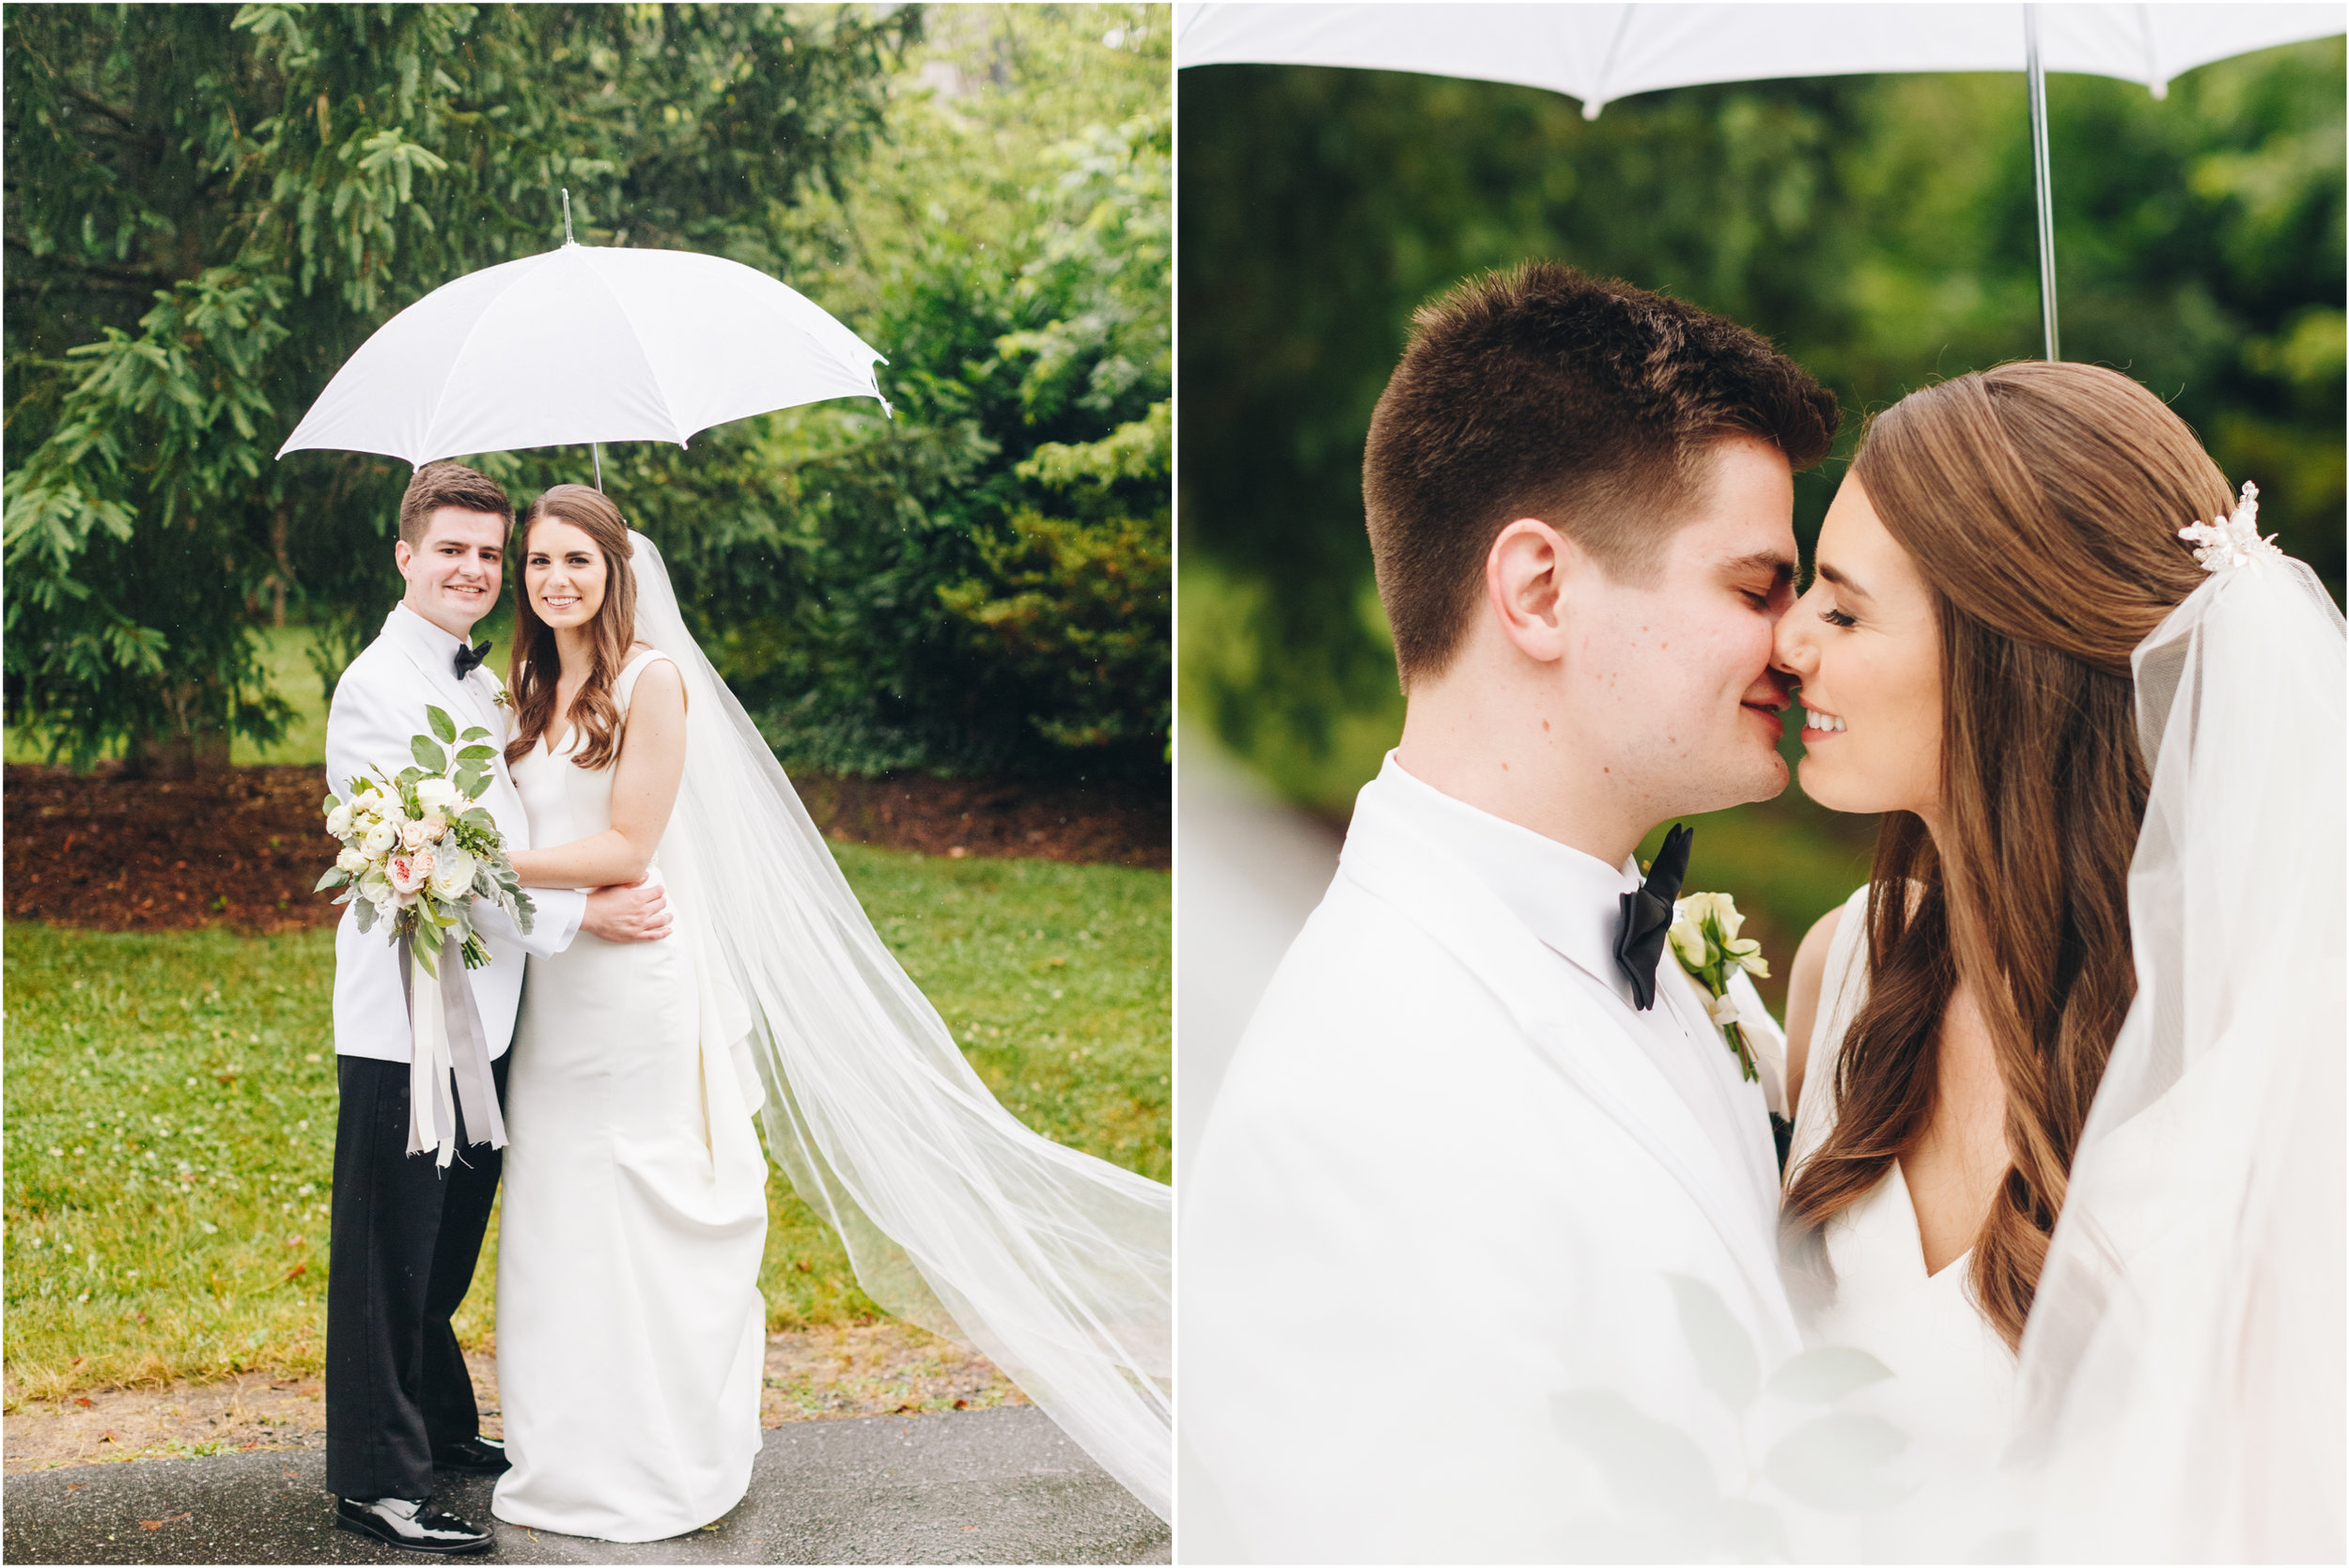 Wedding portraits in the rain